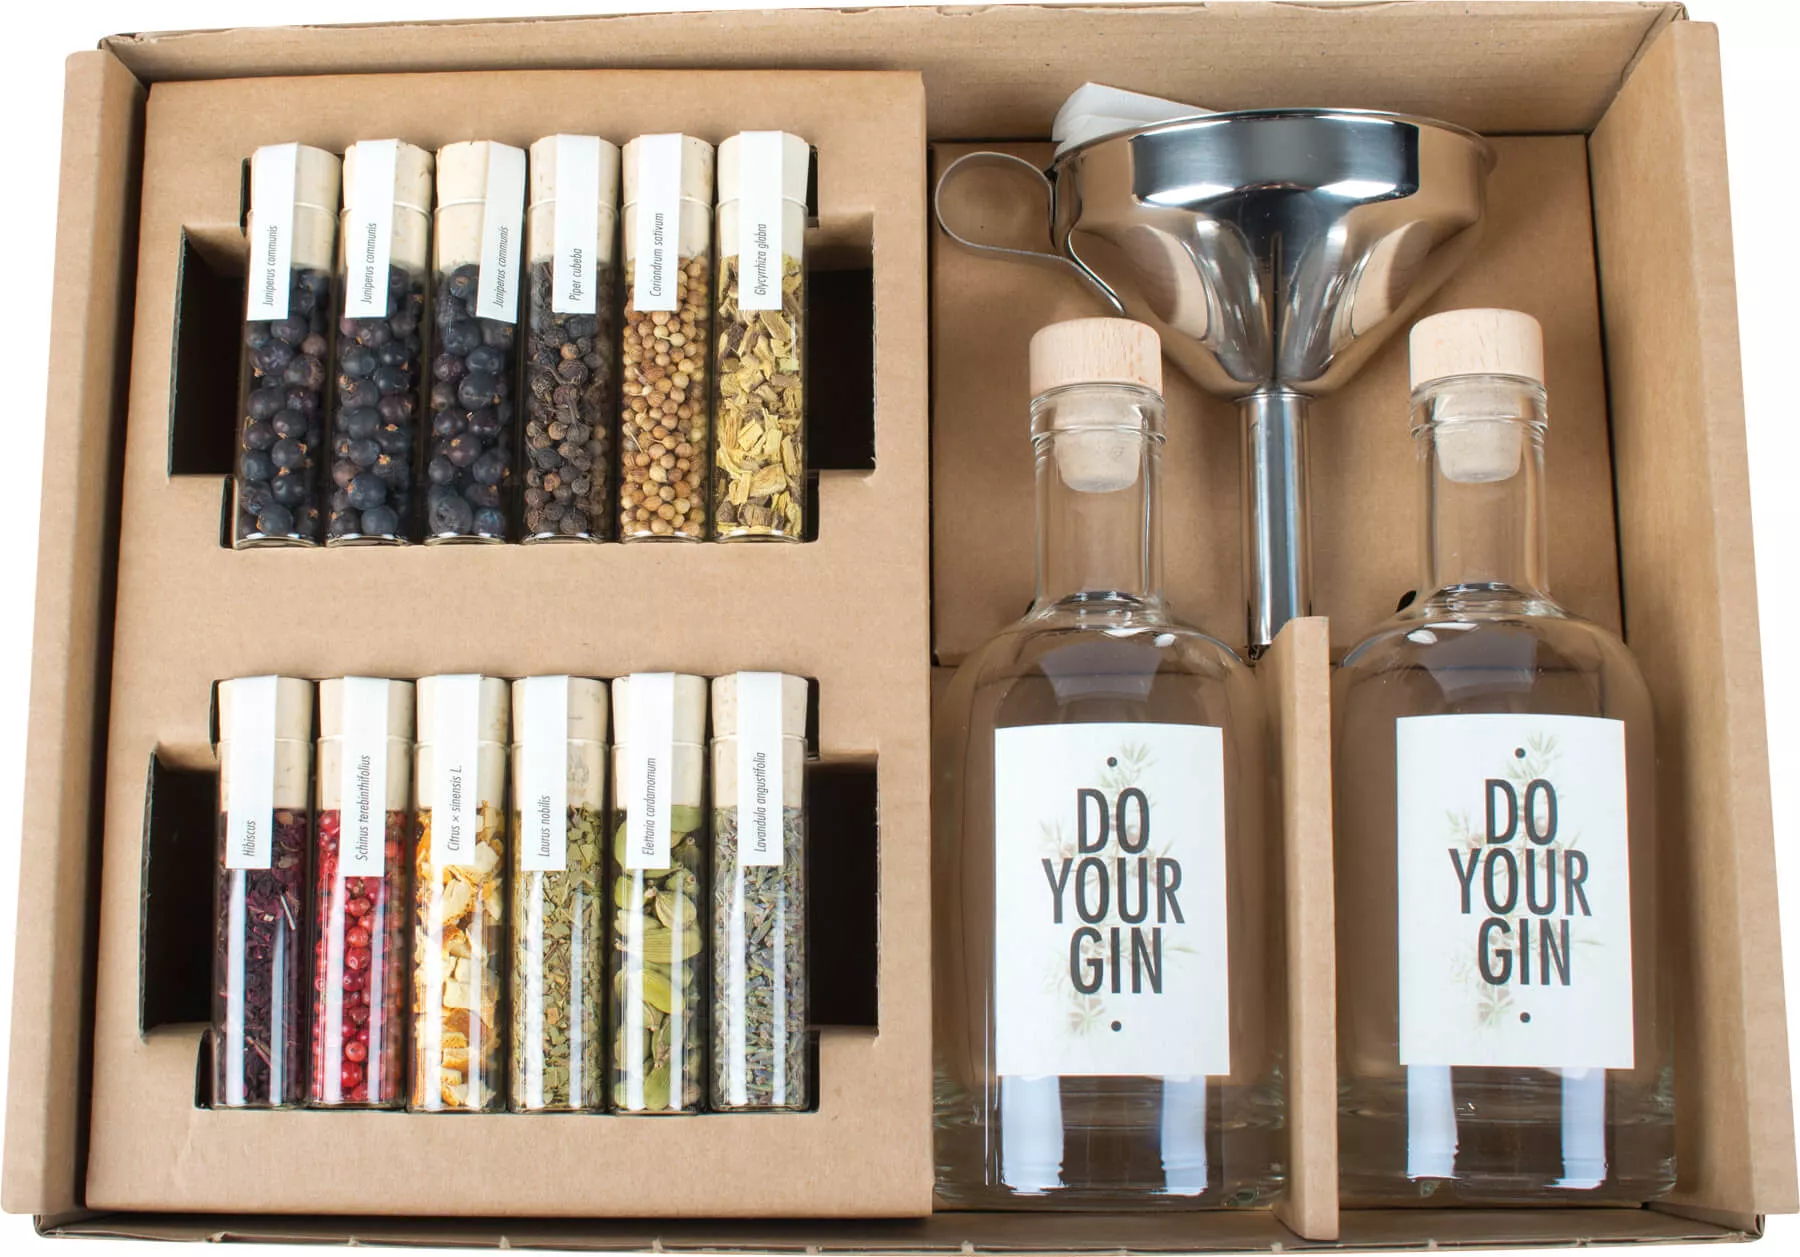 Make Your Own Gin: Homemade Gin Kit